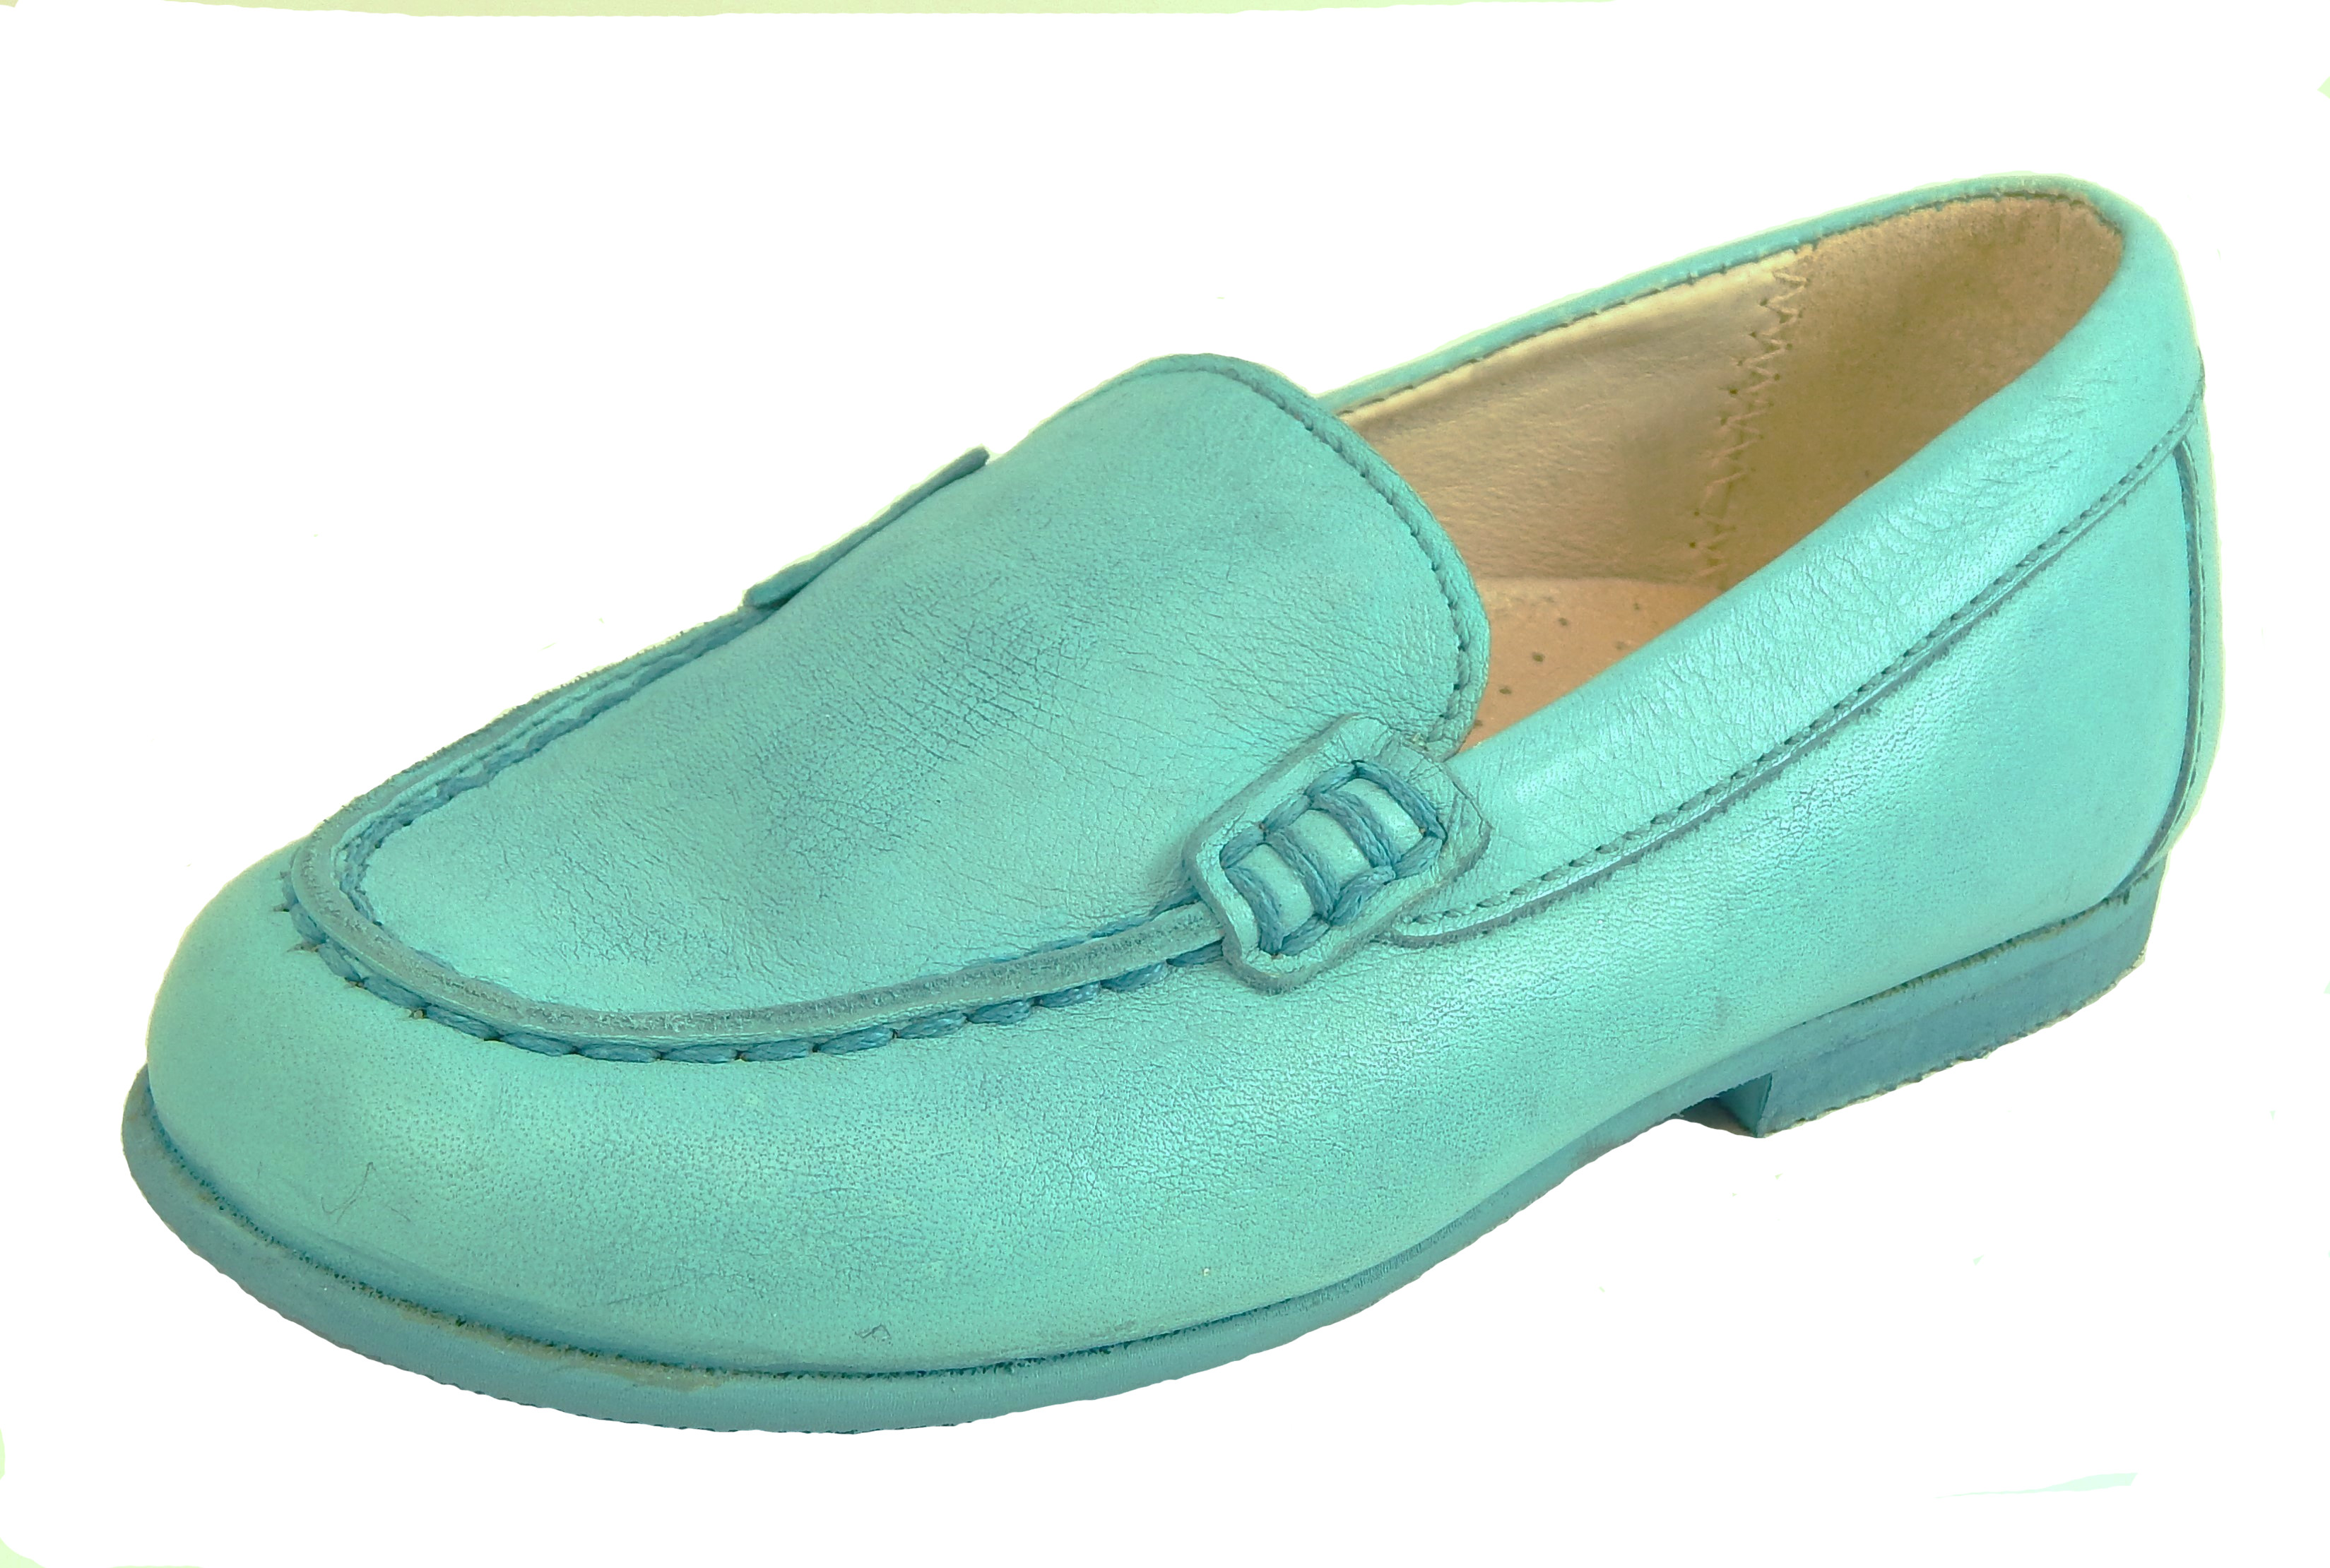 FARO B-7159 - Turquoise Loafers - Euro 24 Size 7